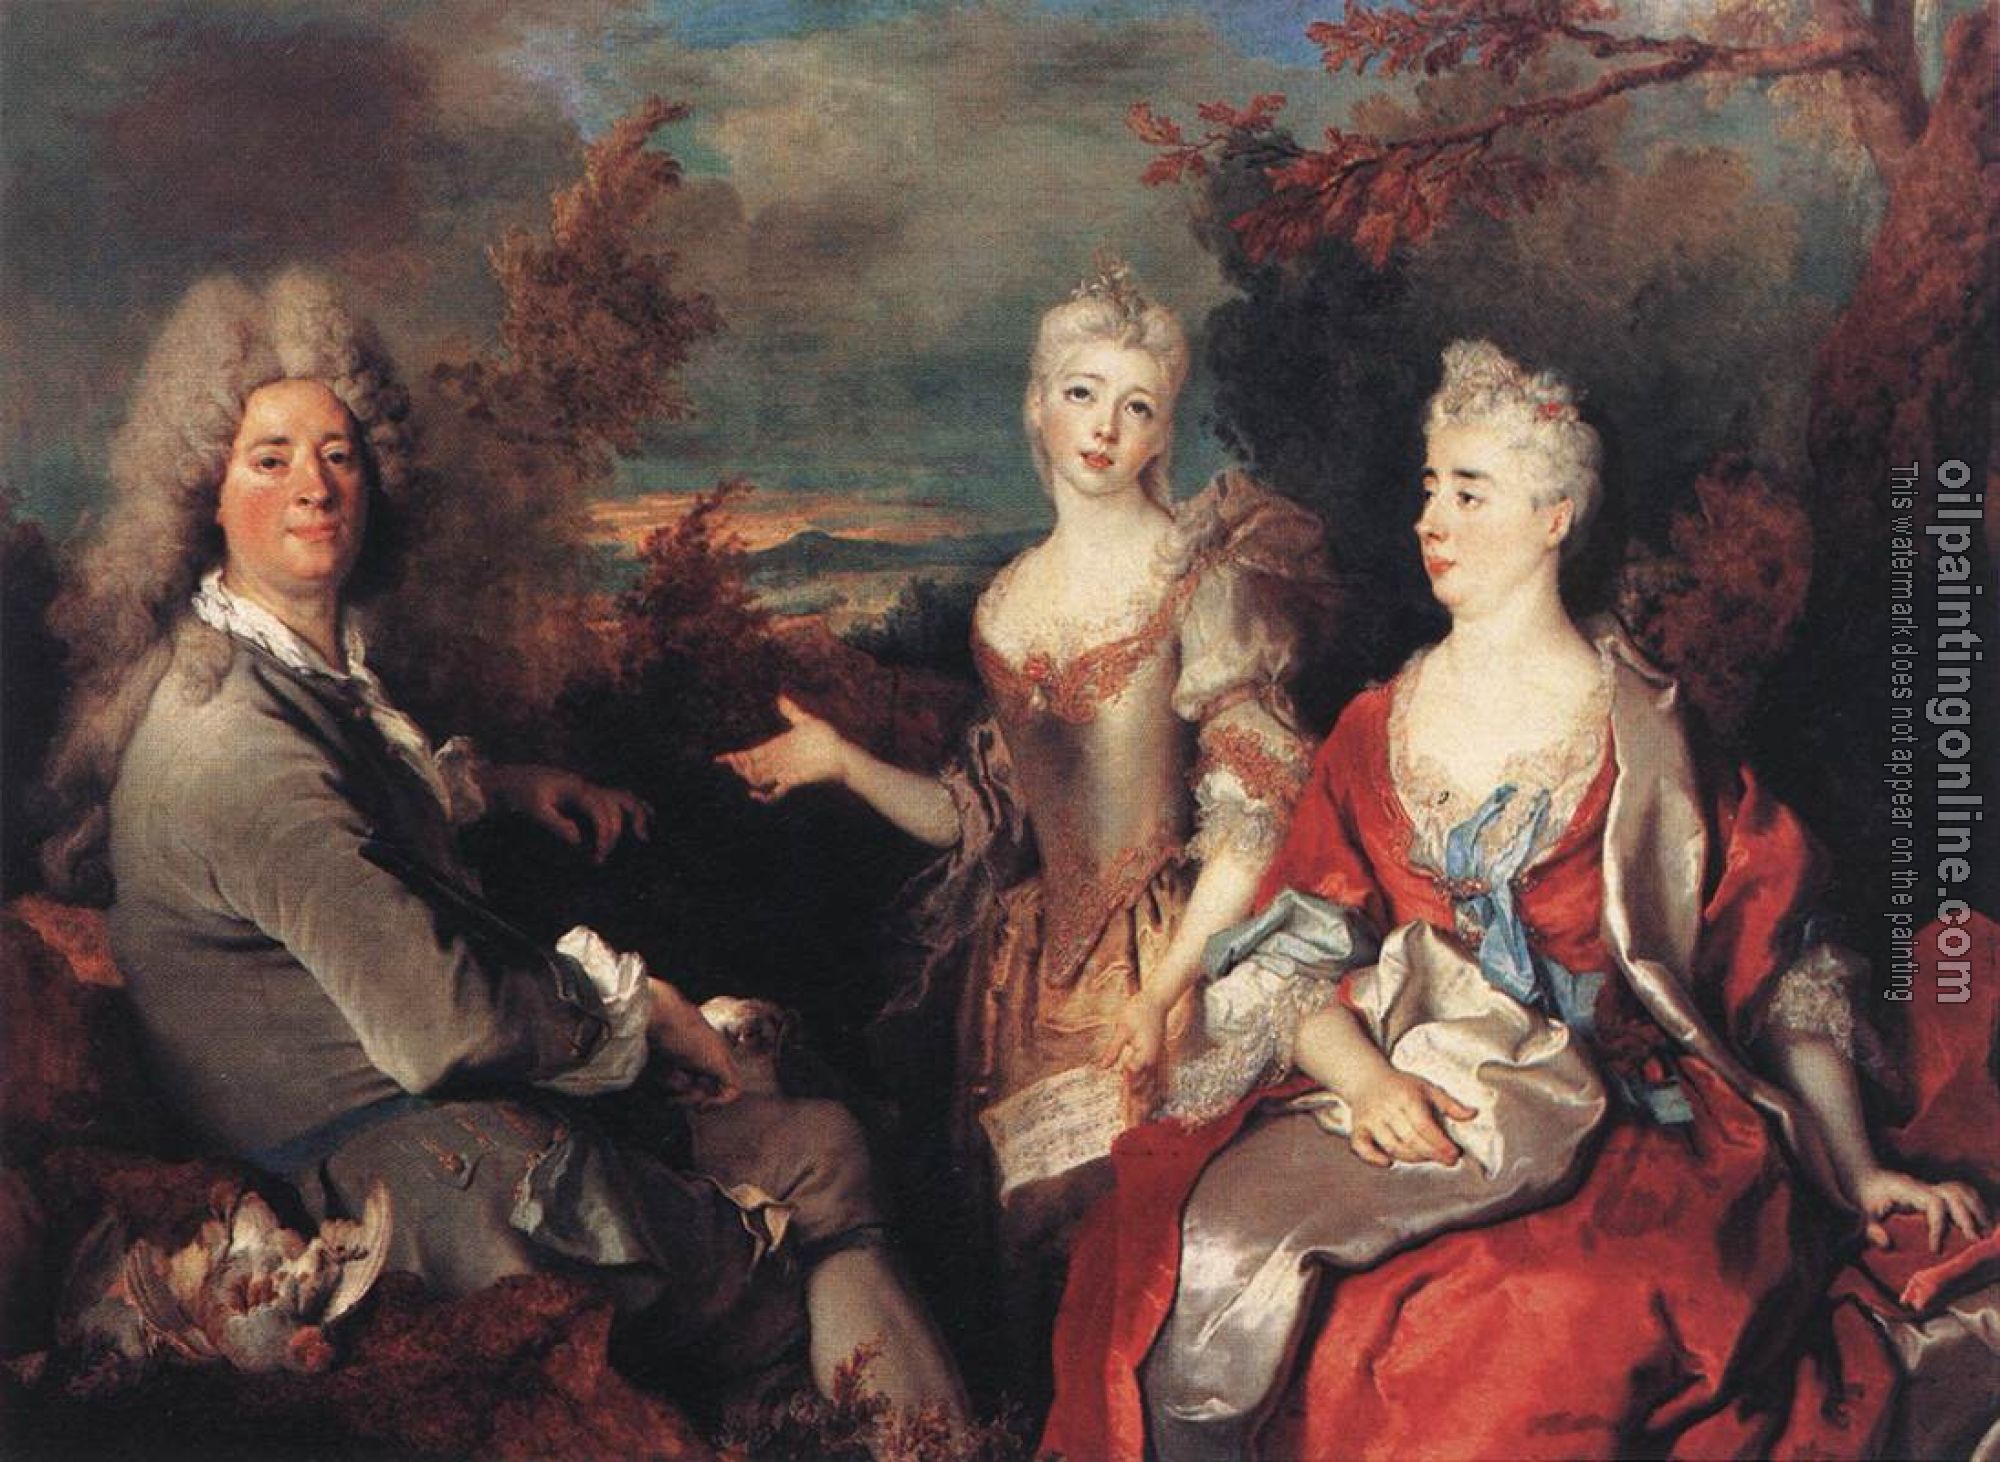 Largilliere, Nicolas de - The Artist and his Family